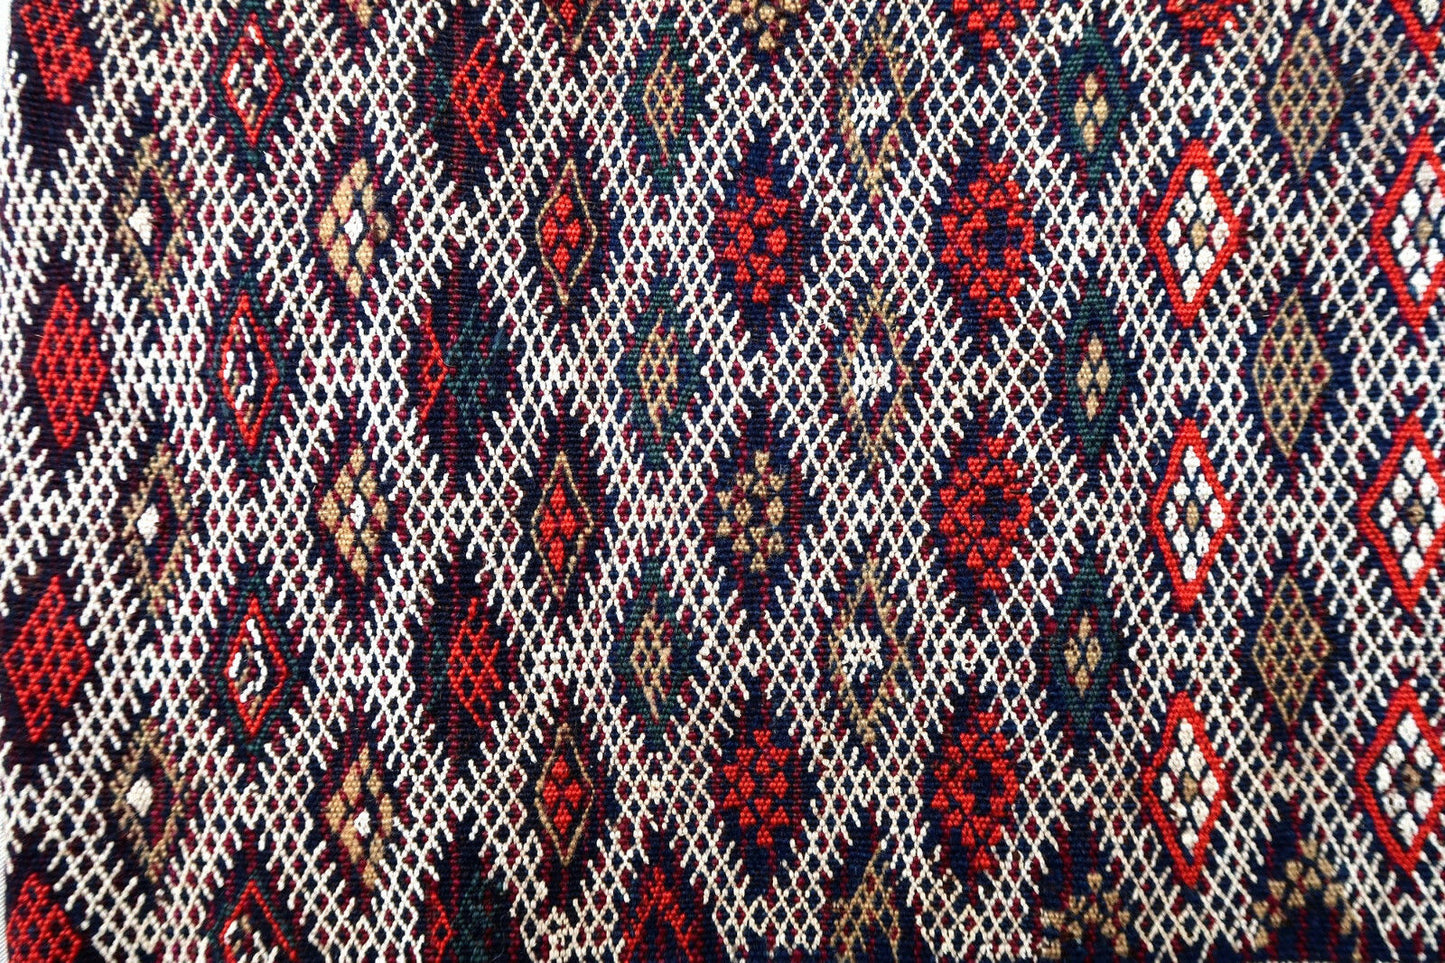 Handmade vintage Moroccan Berber kilim cushion 1.2' x 2.8' (38cm x 87cm) 1950s - 1P44